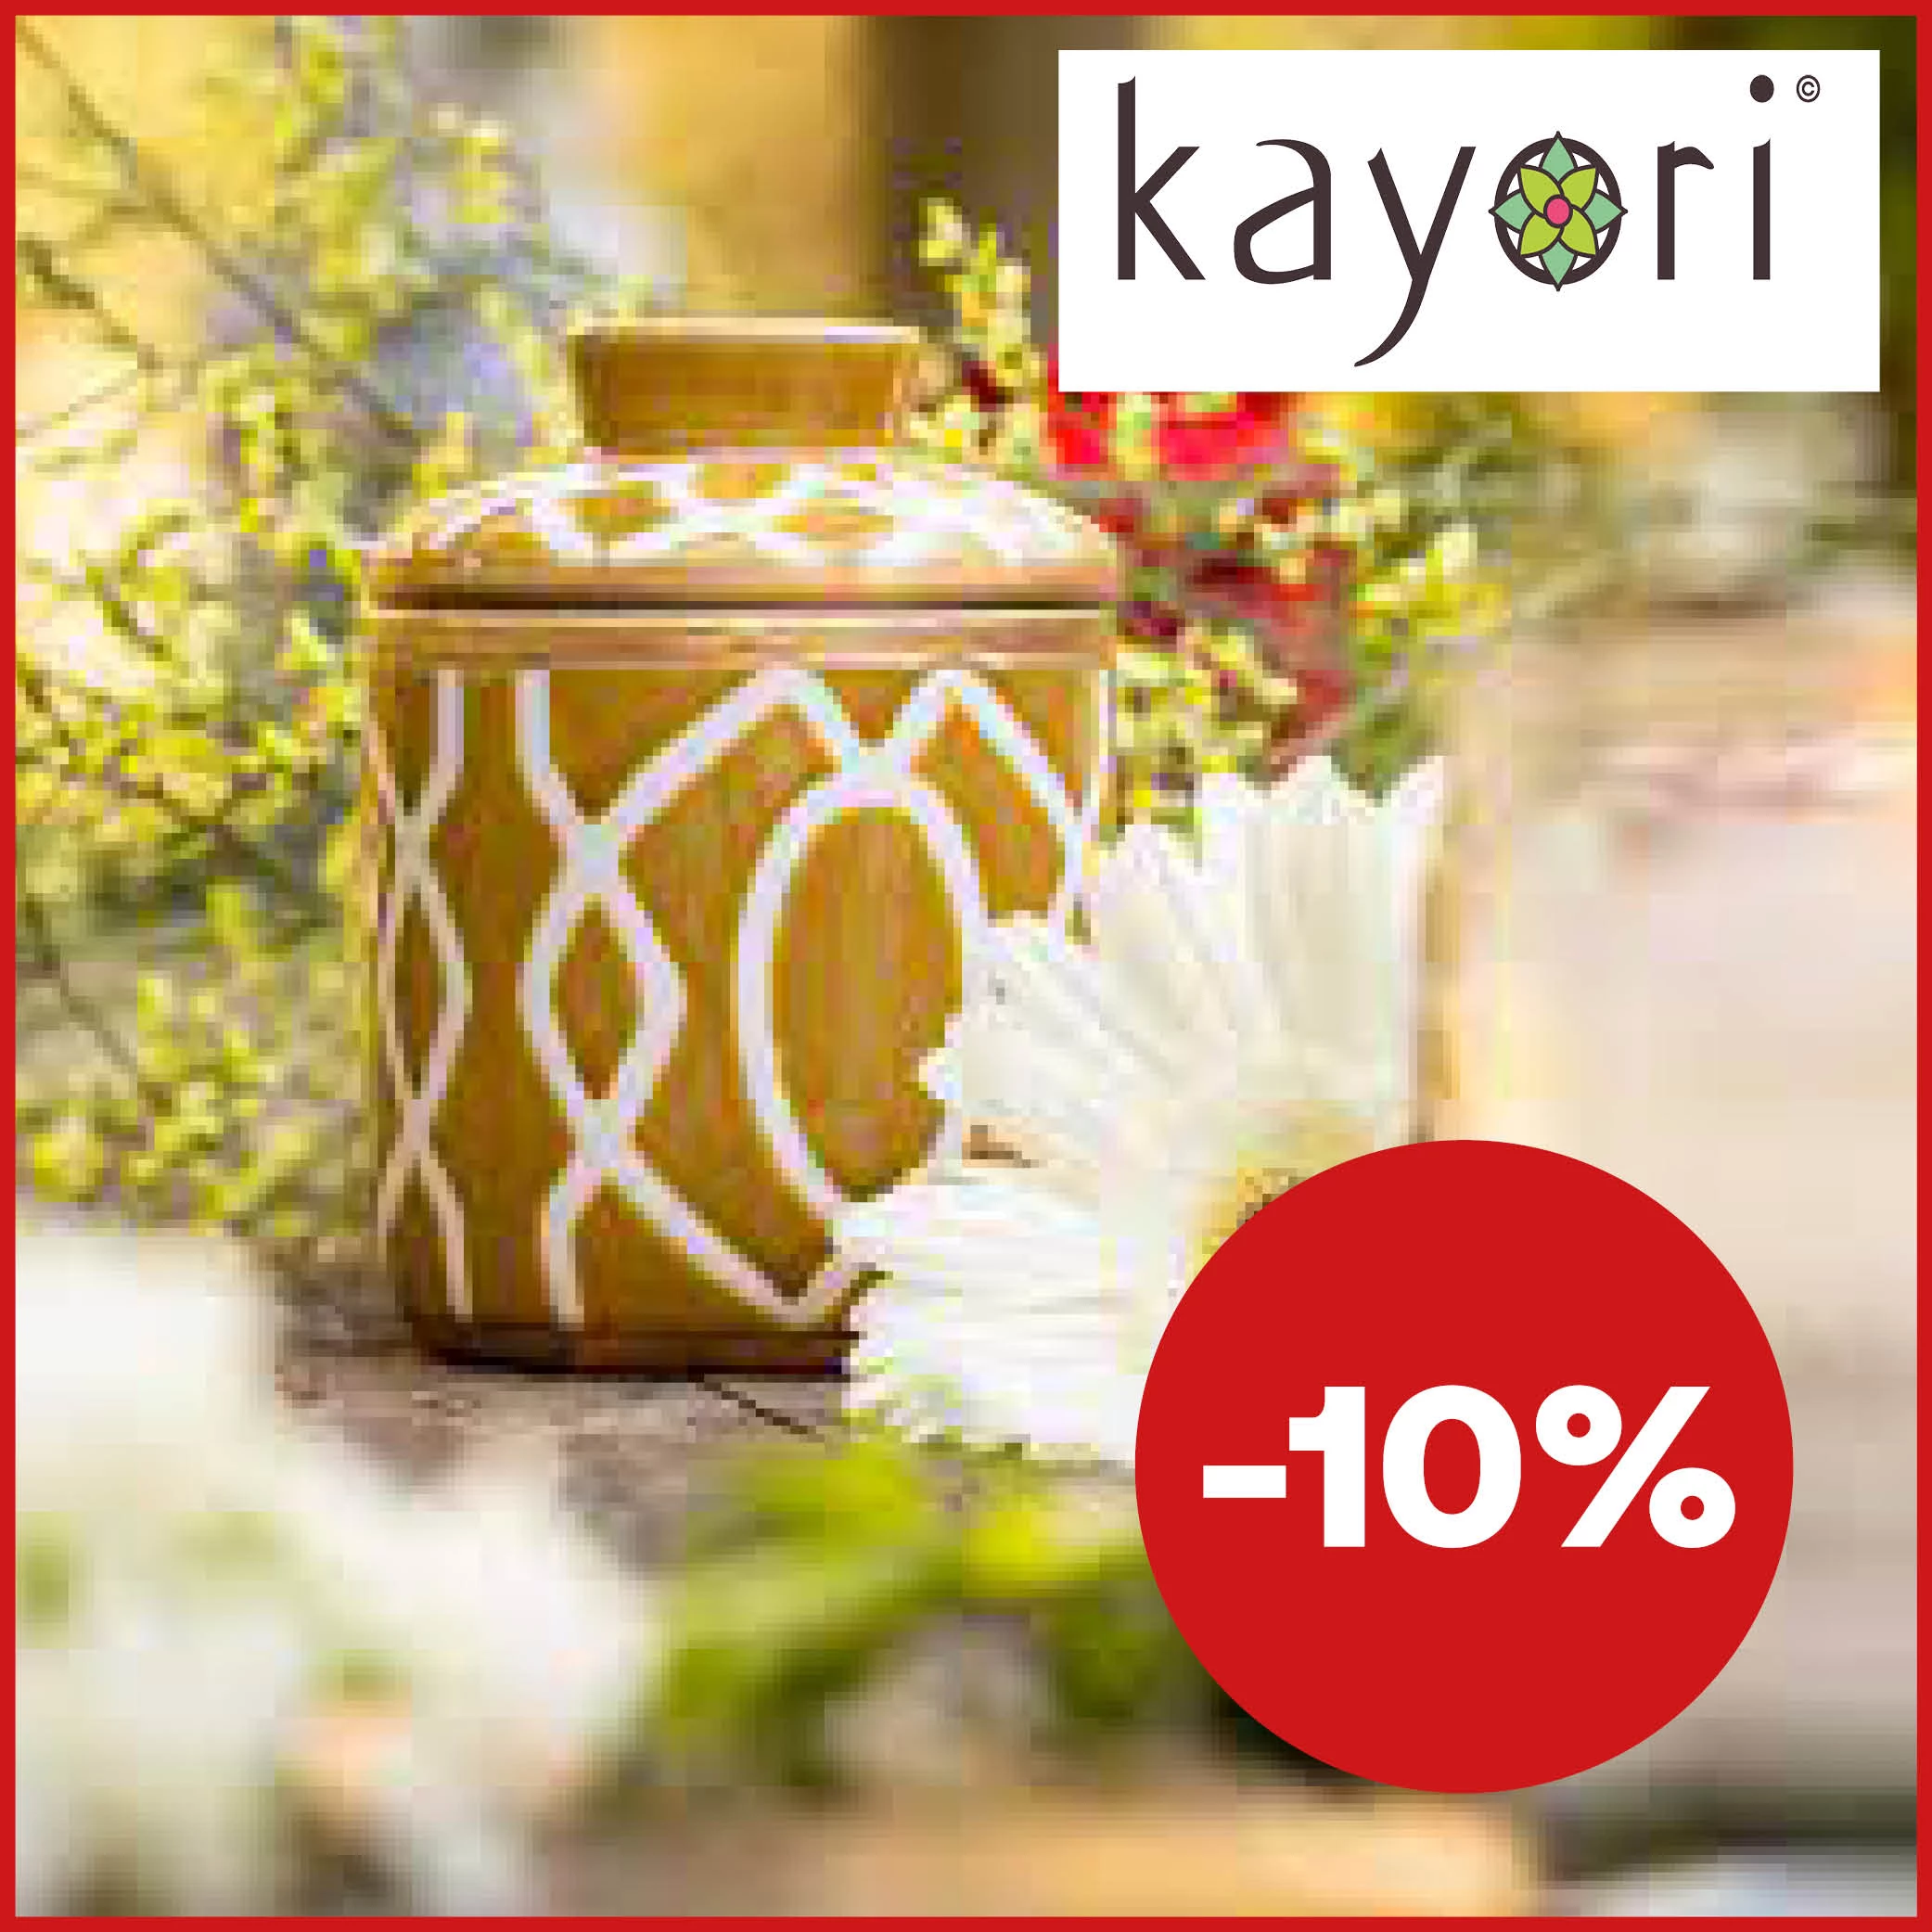 Kayori -10% korting solden